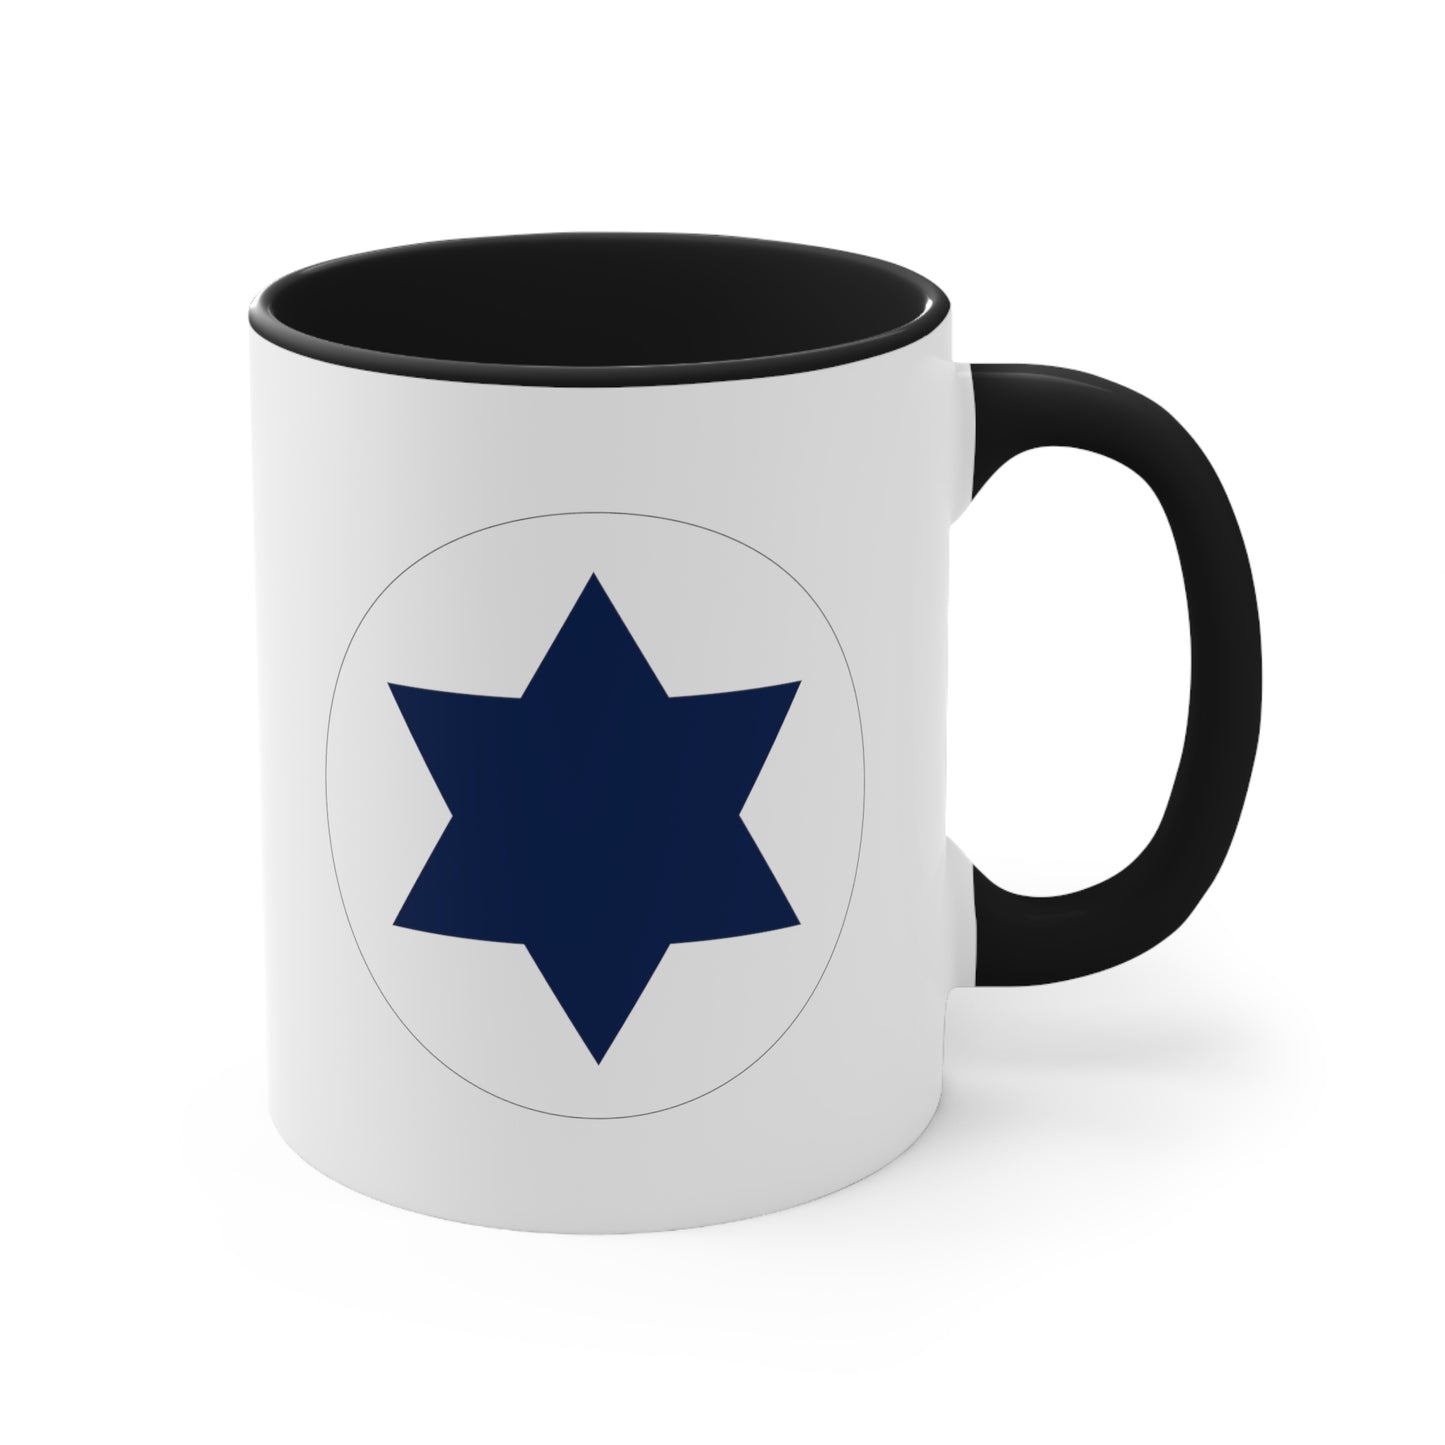 Israeli Air Force Roundel Coffee Mug - Double Sided Black Accent Ceramic 11oz - by TheGlassyLass.com